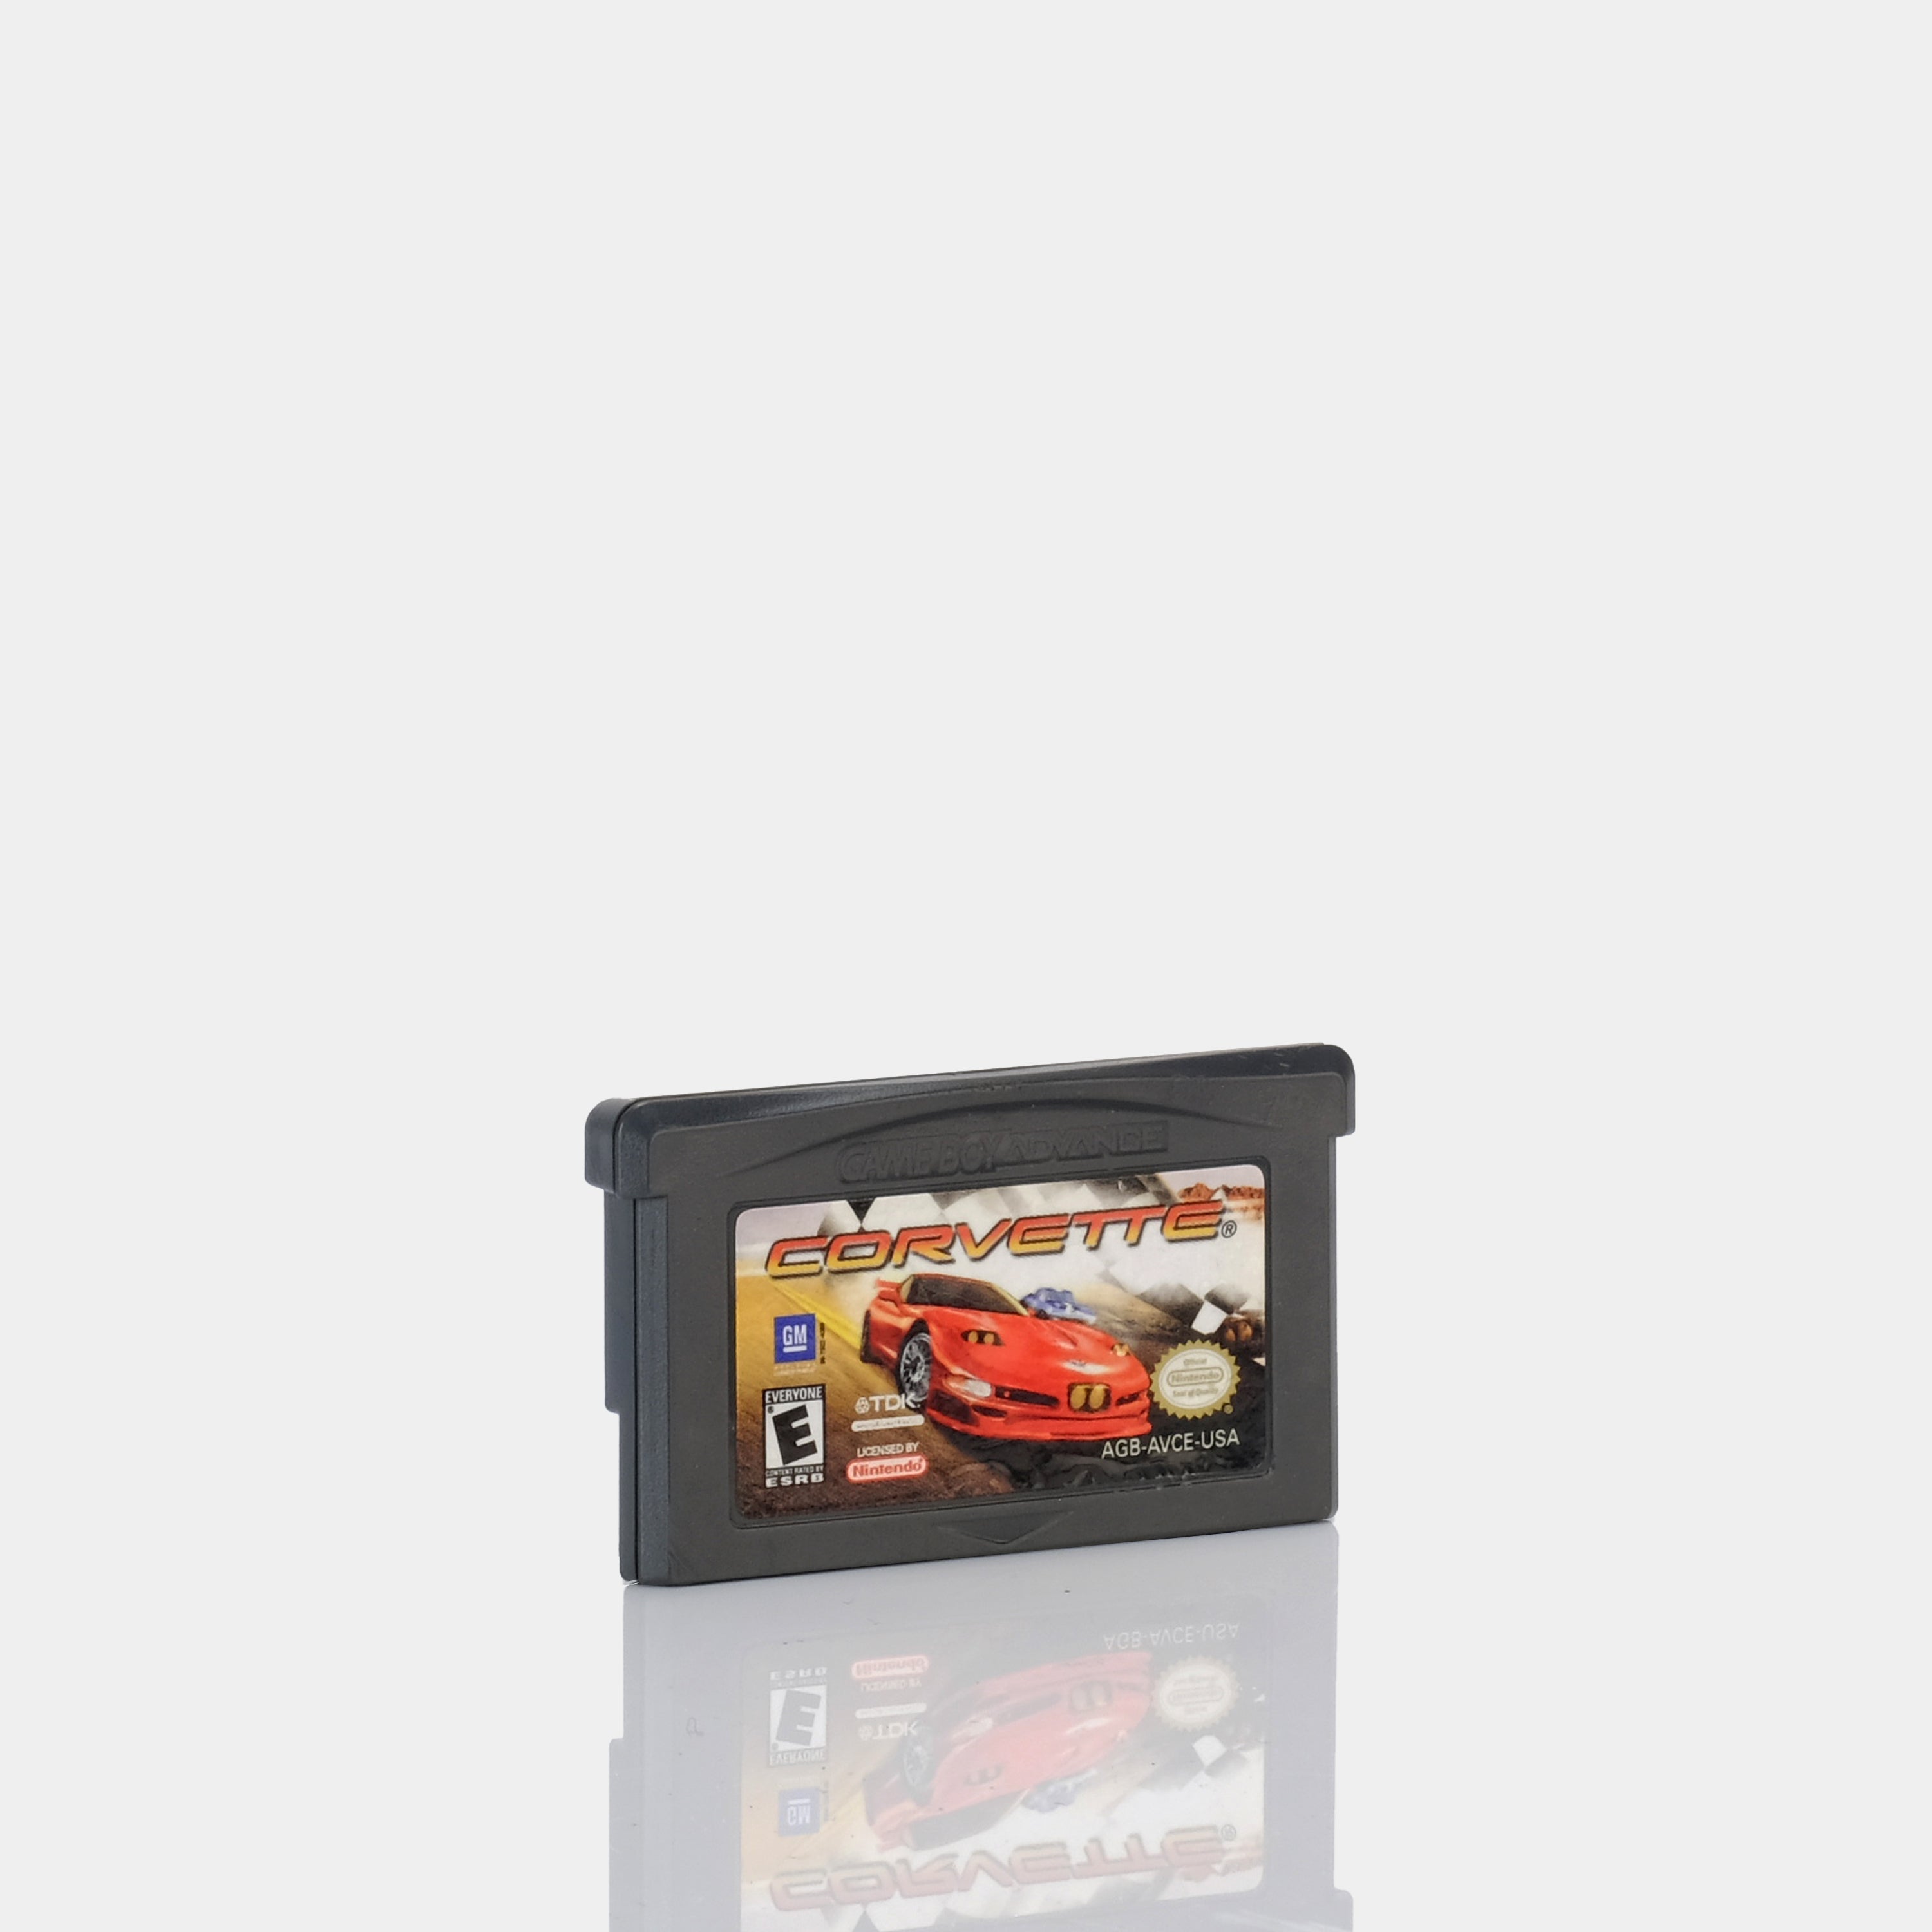 Corvette Game Boy Advance Game